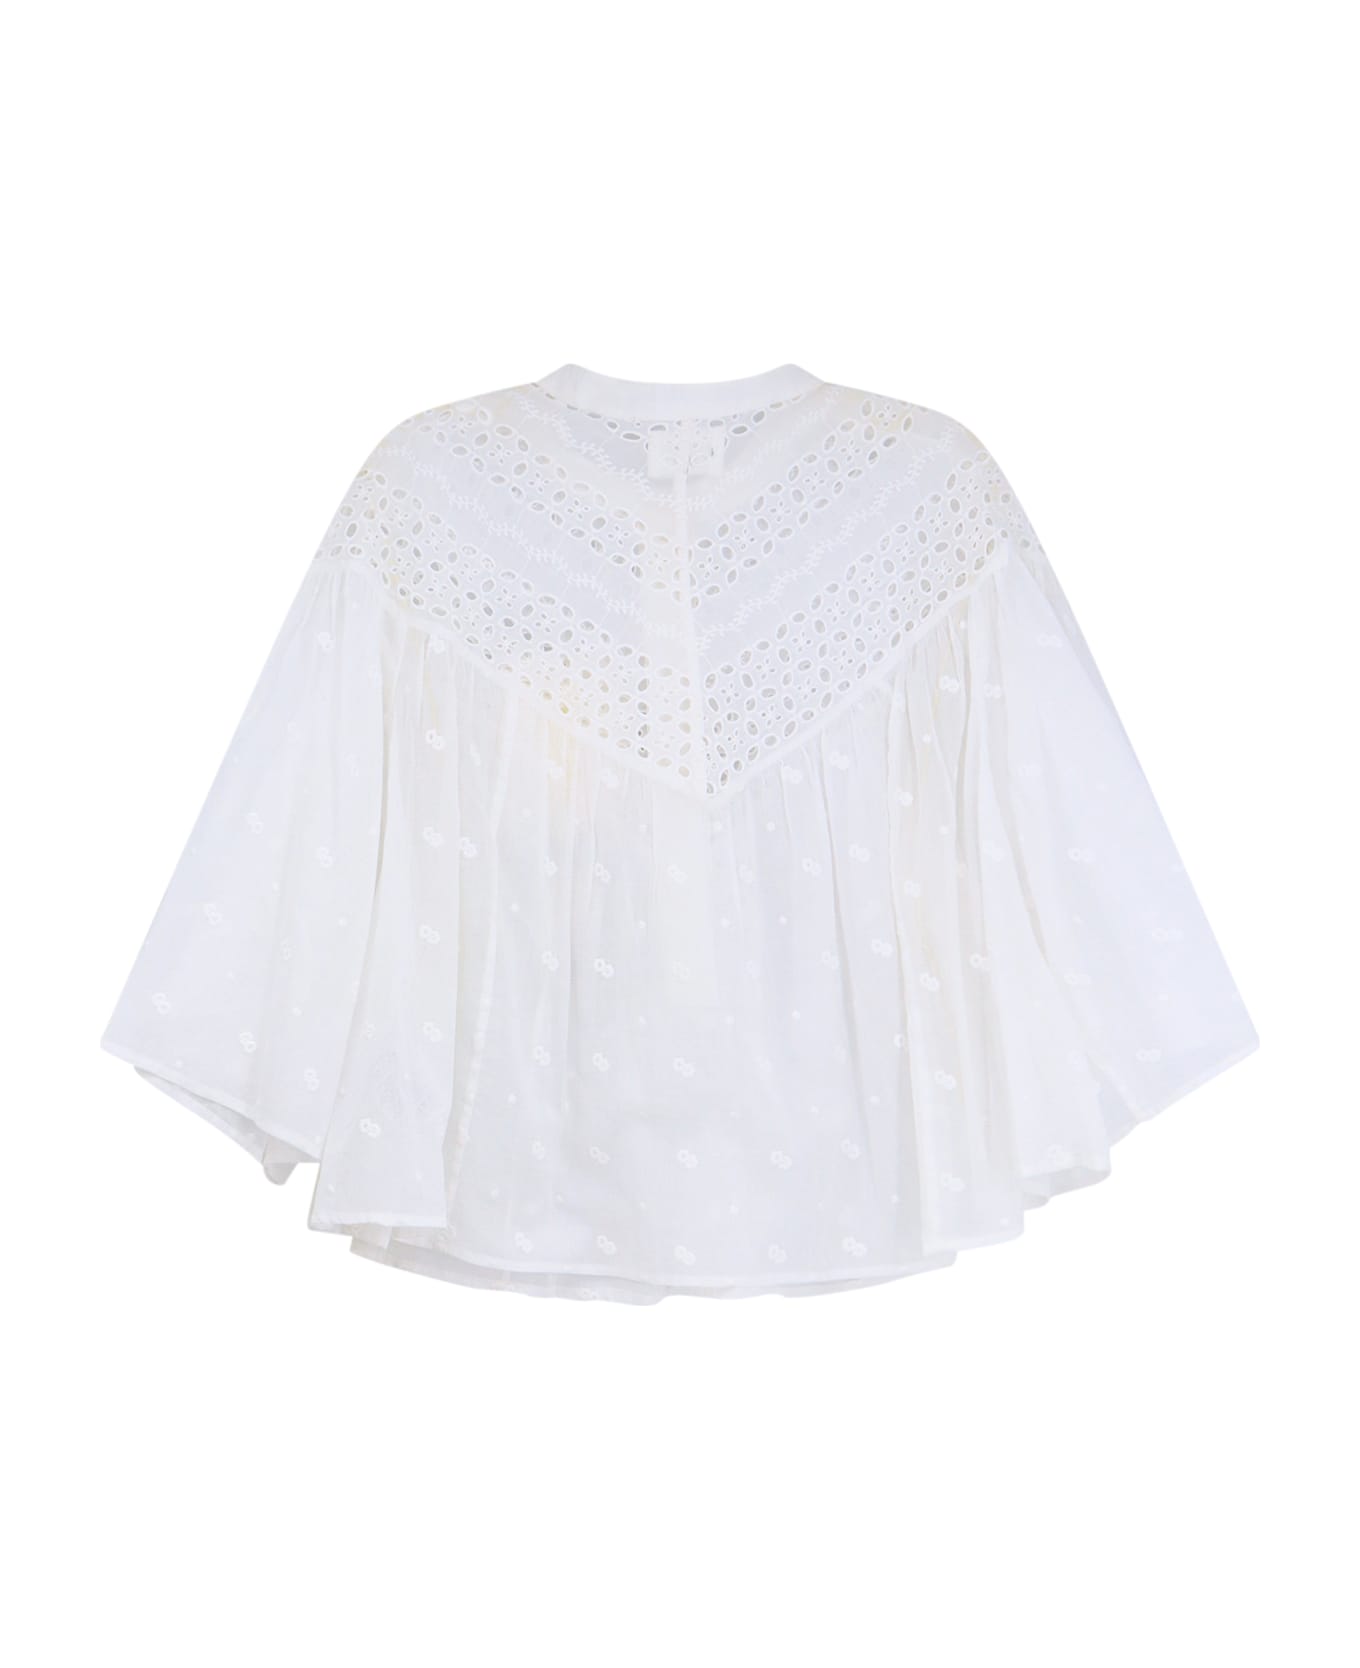 Marant Étoile Safi Shirt - White ブラウス